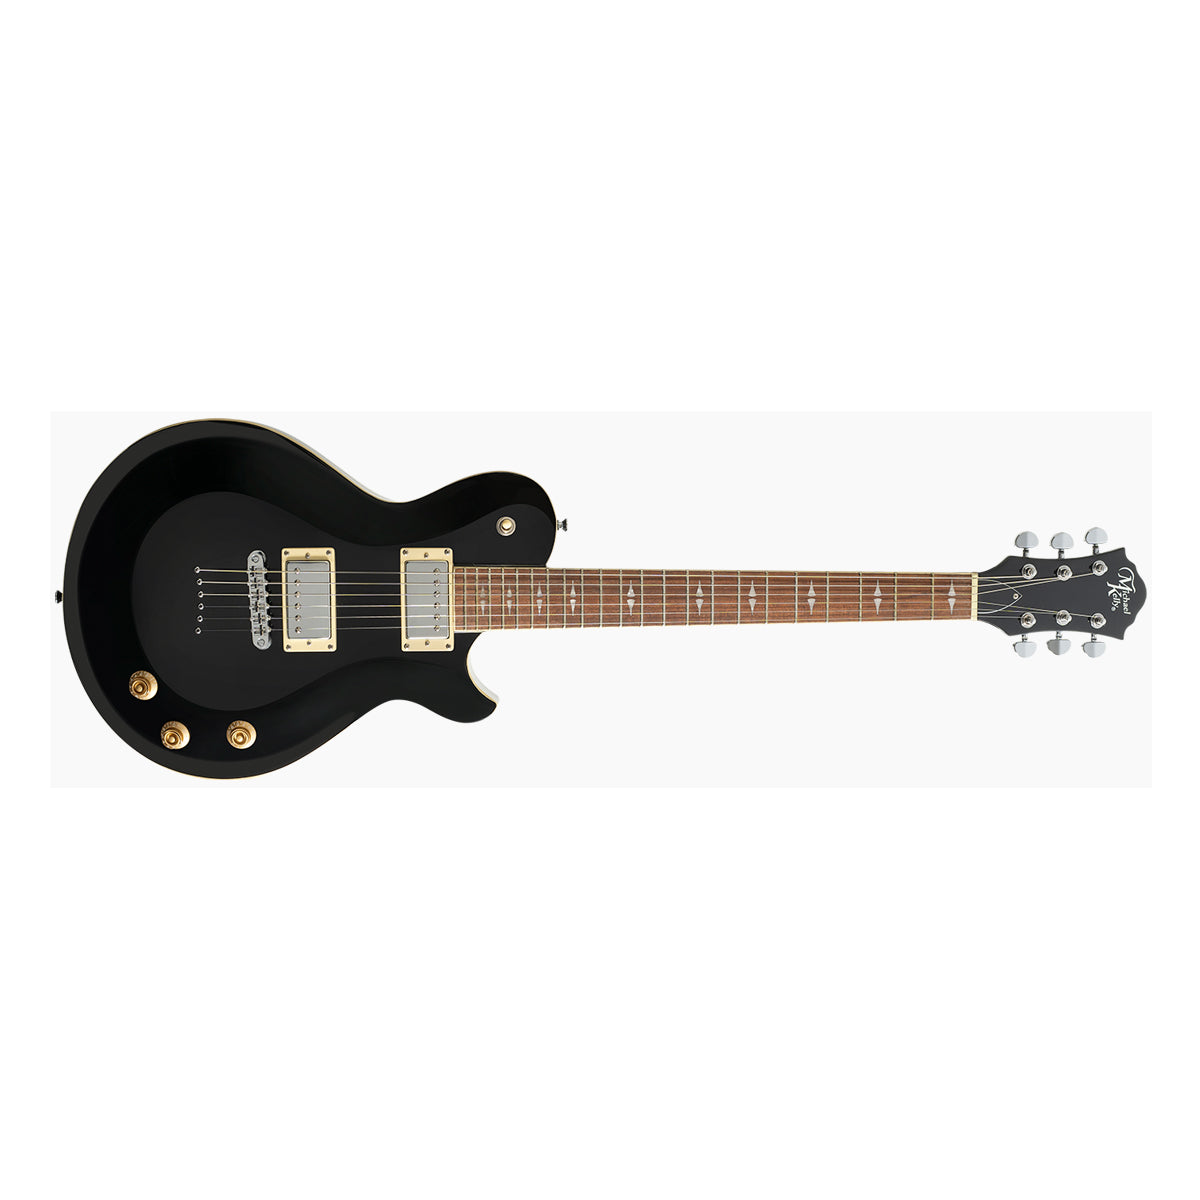 Michael Kelly Patriot Decree Standard Electric Guitar Gloss Black - MKPDSGBJRC